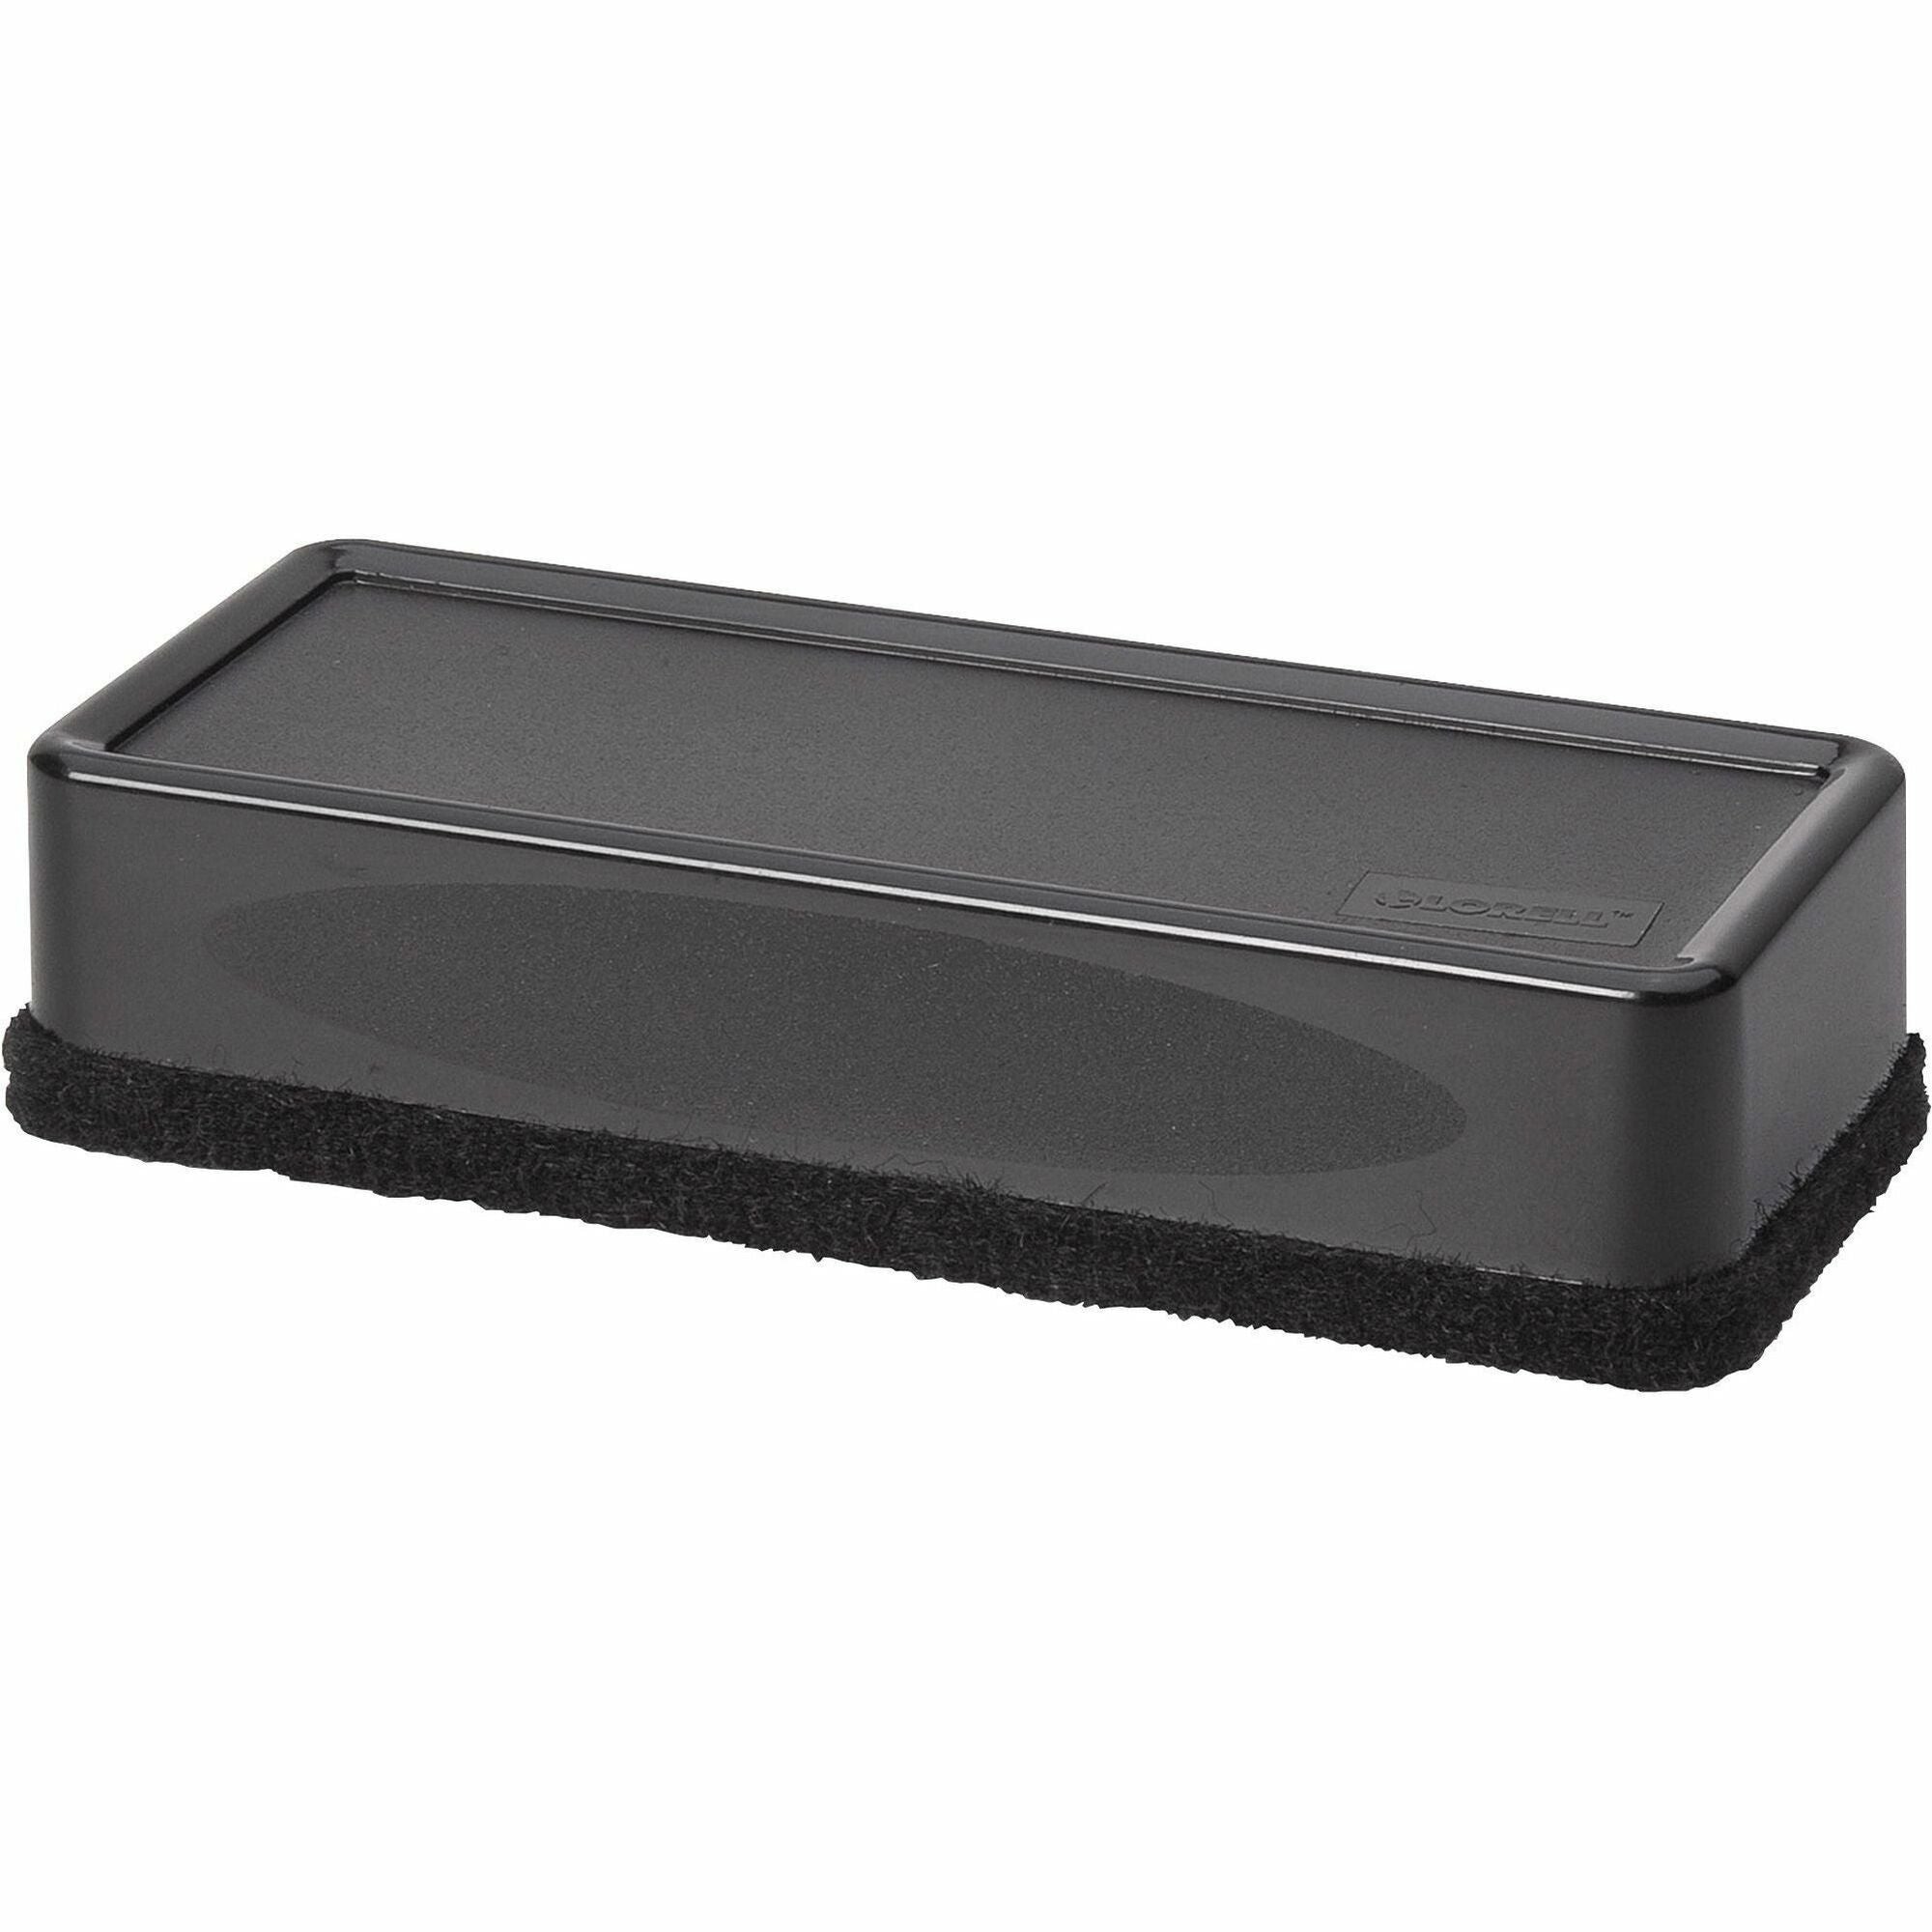 Lorell Dry-Erase Board Eraser - 2.19" Width x 5.19" Length - Black - Nonwoven, Plastic - 1Each - 